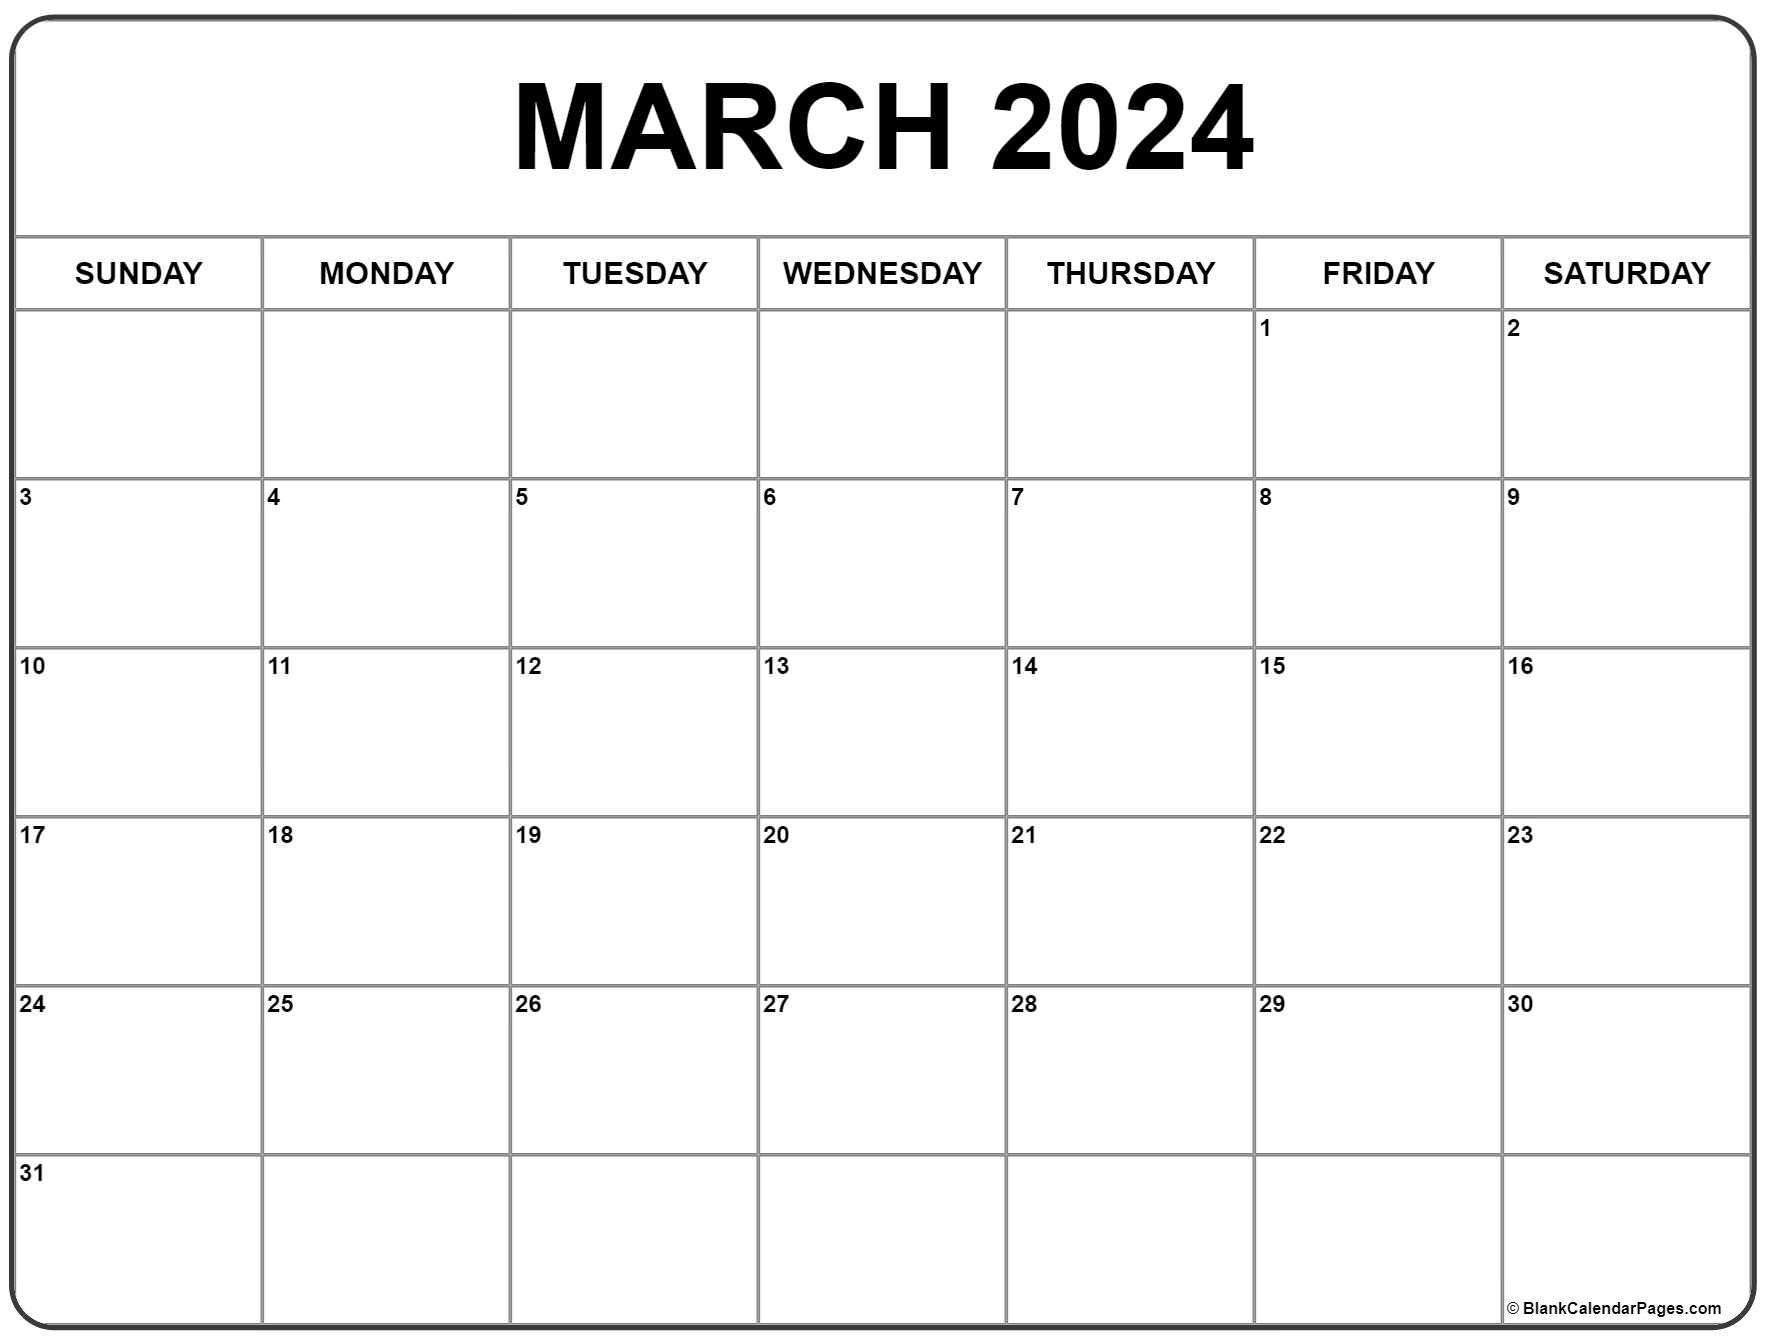 Free March 2022 Calendar March 2022 Calendar | Free Printable Calendar Templates